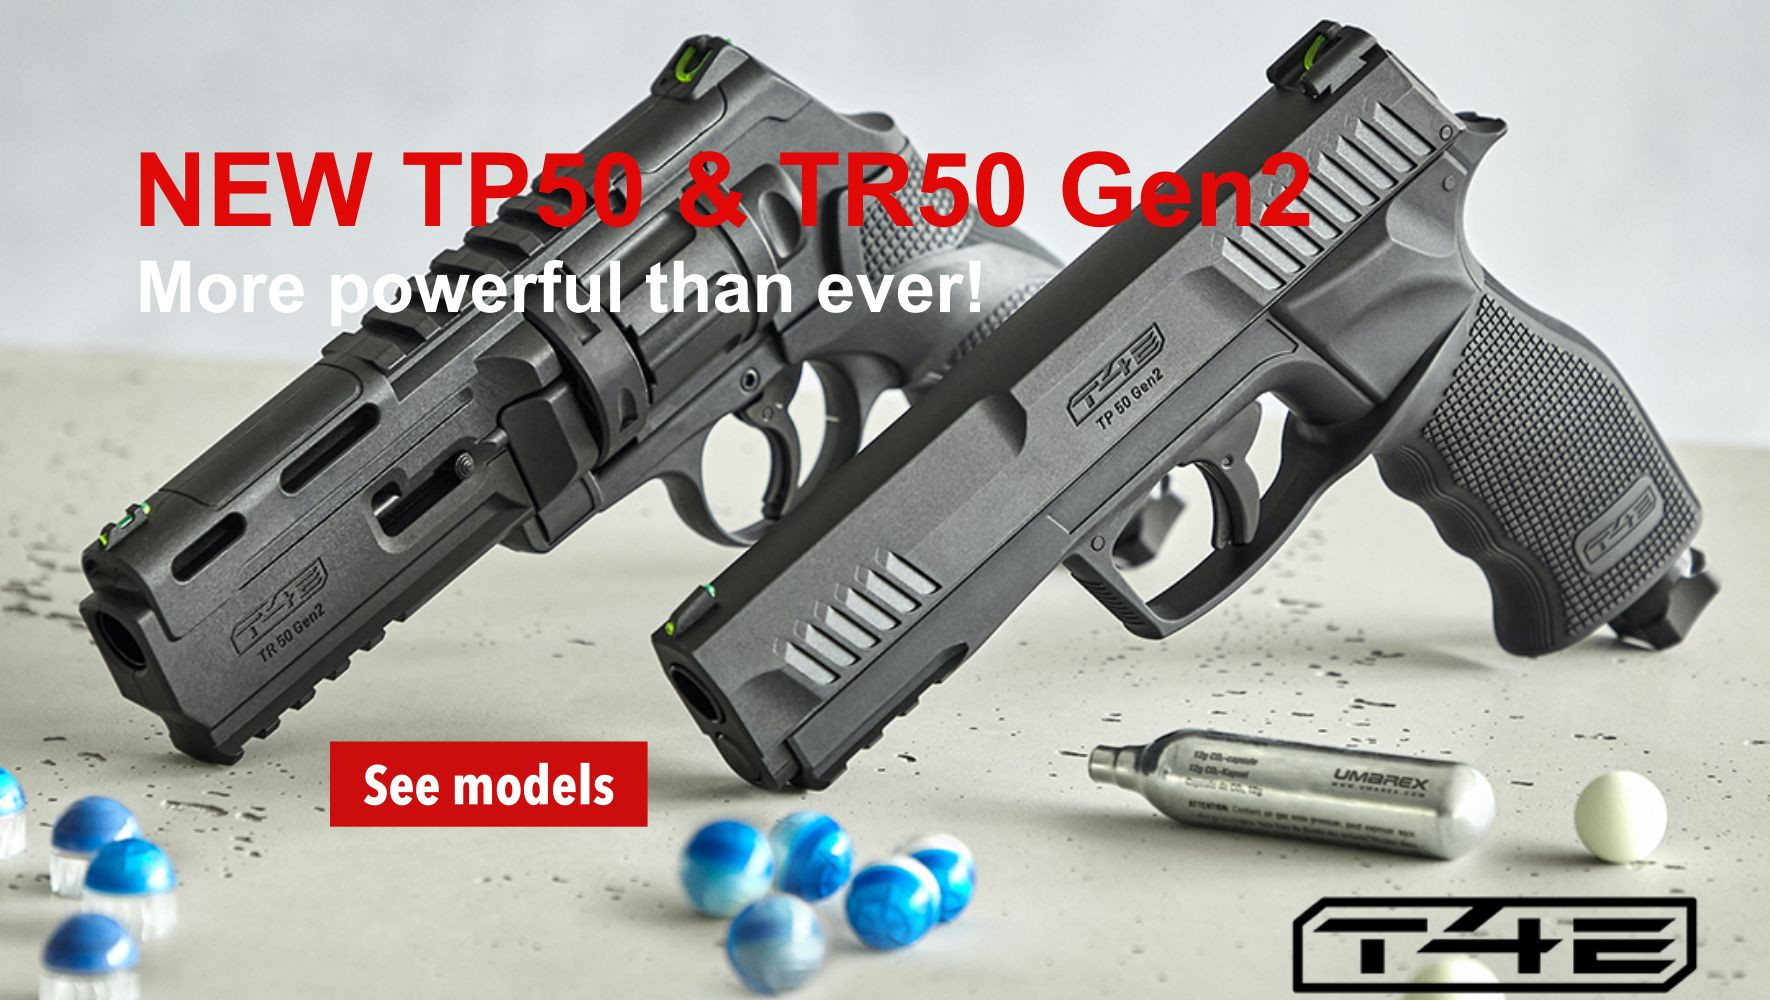 New TP50 and TR50 Gen2 defensive pistols